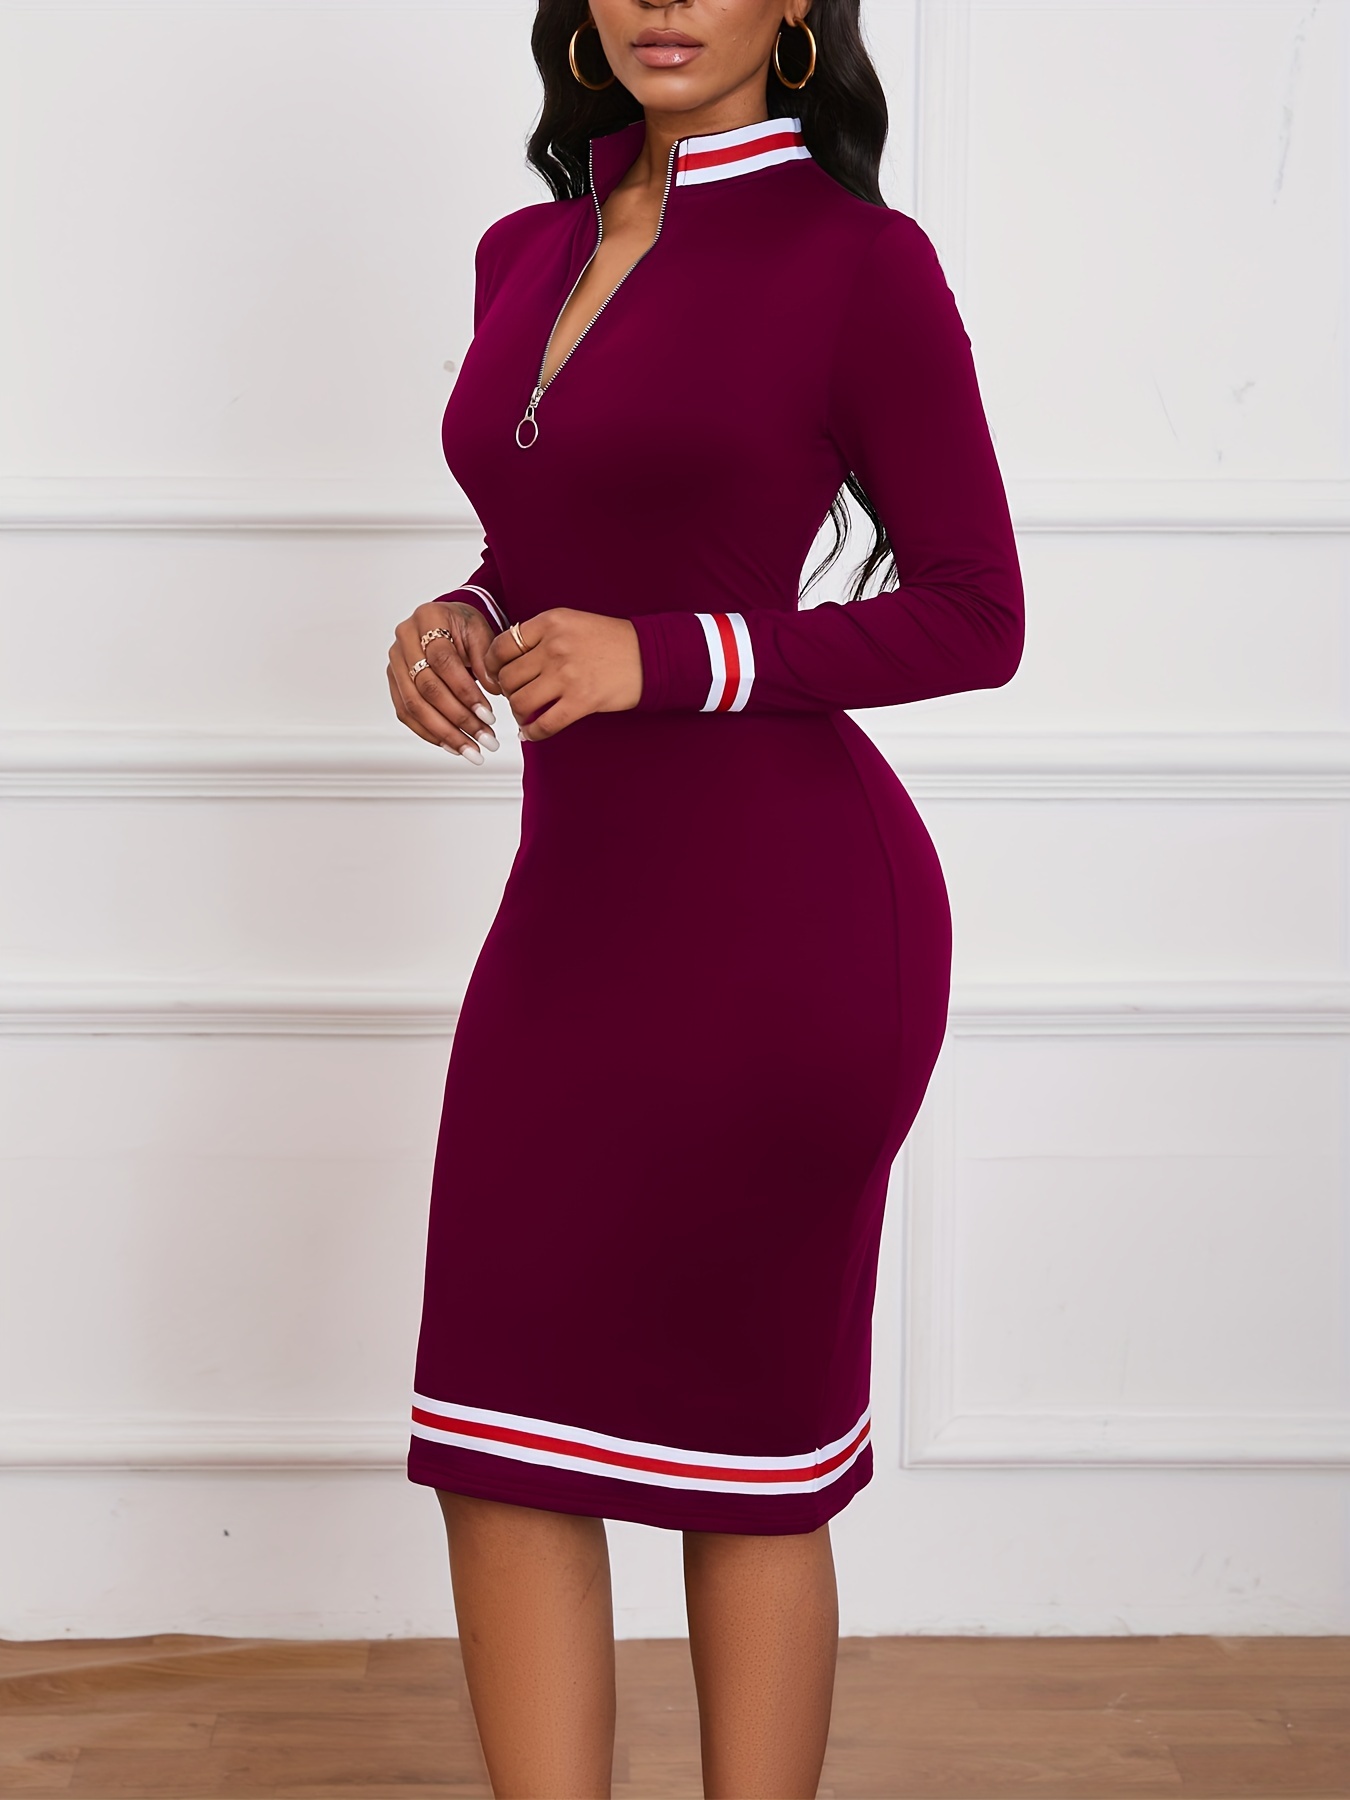 zip up striped print dress, casual long sleeve bodycon midi dress, women's clothing burgundy 3